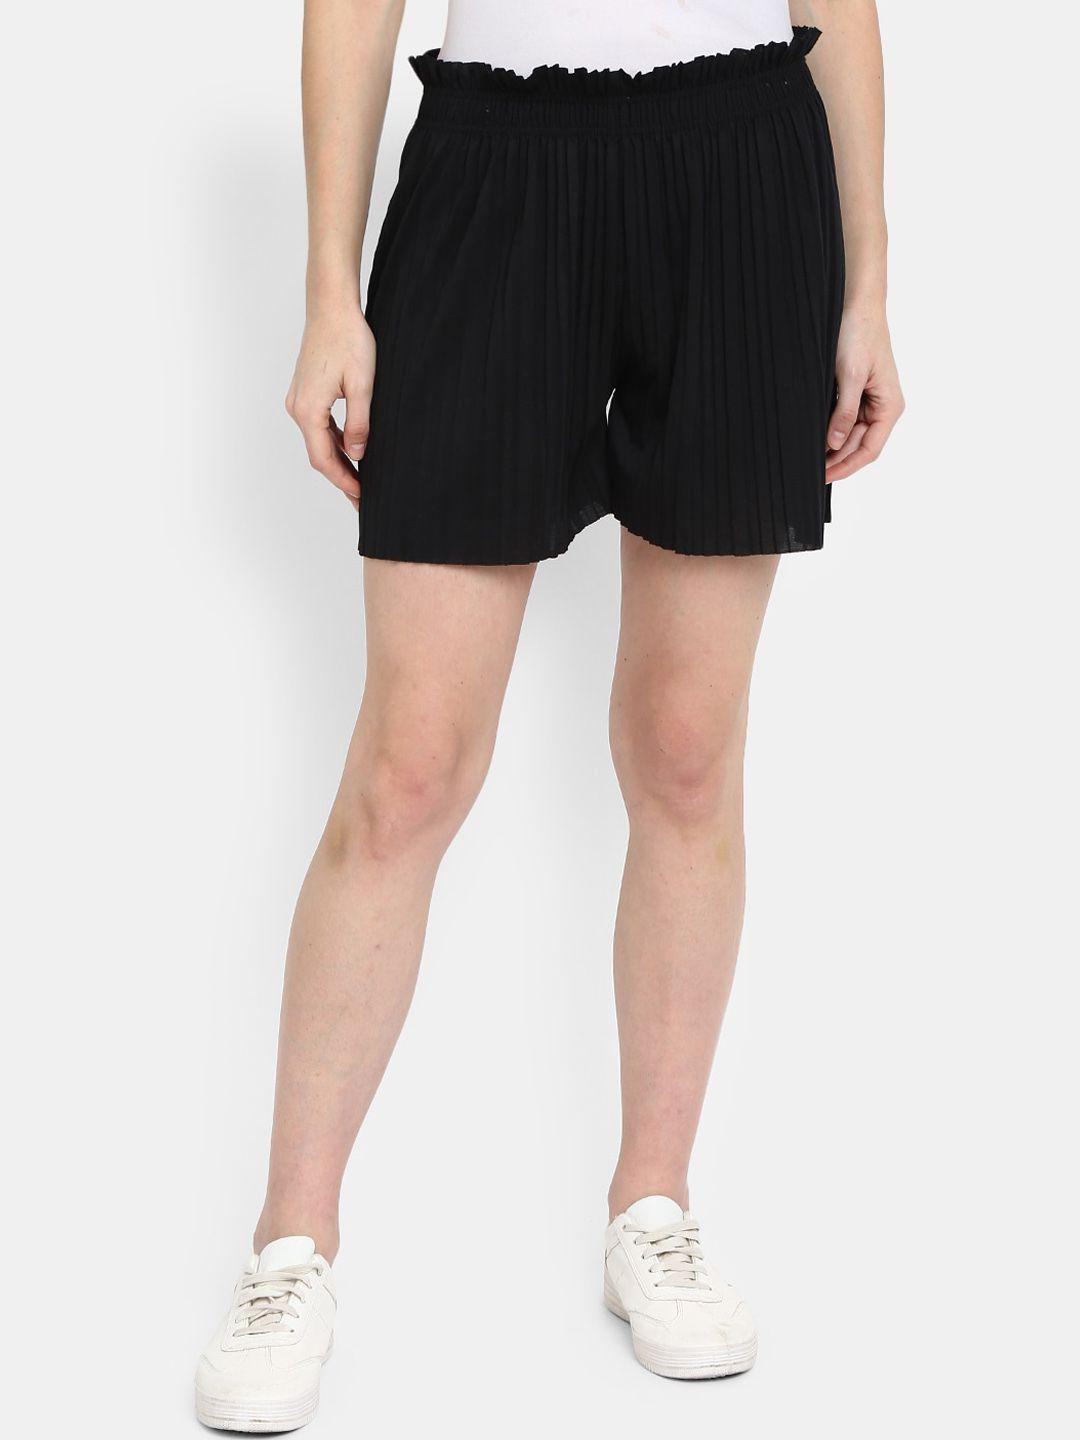 v-mart women mid-rise self designed casual cotton shorts